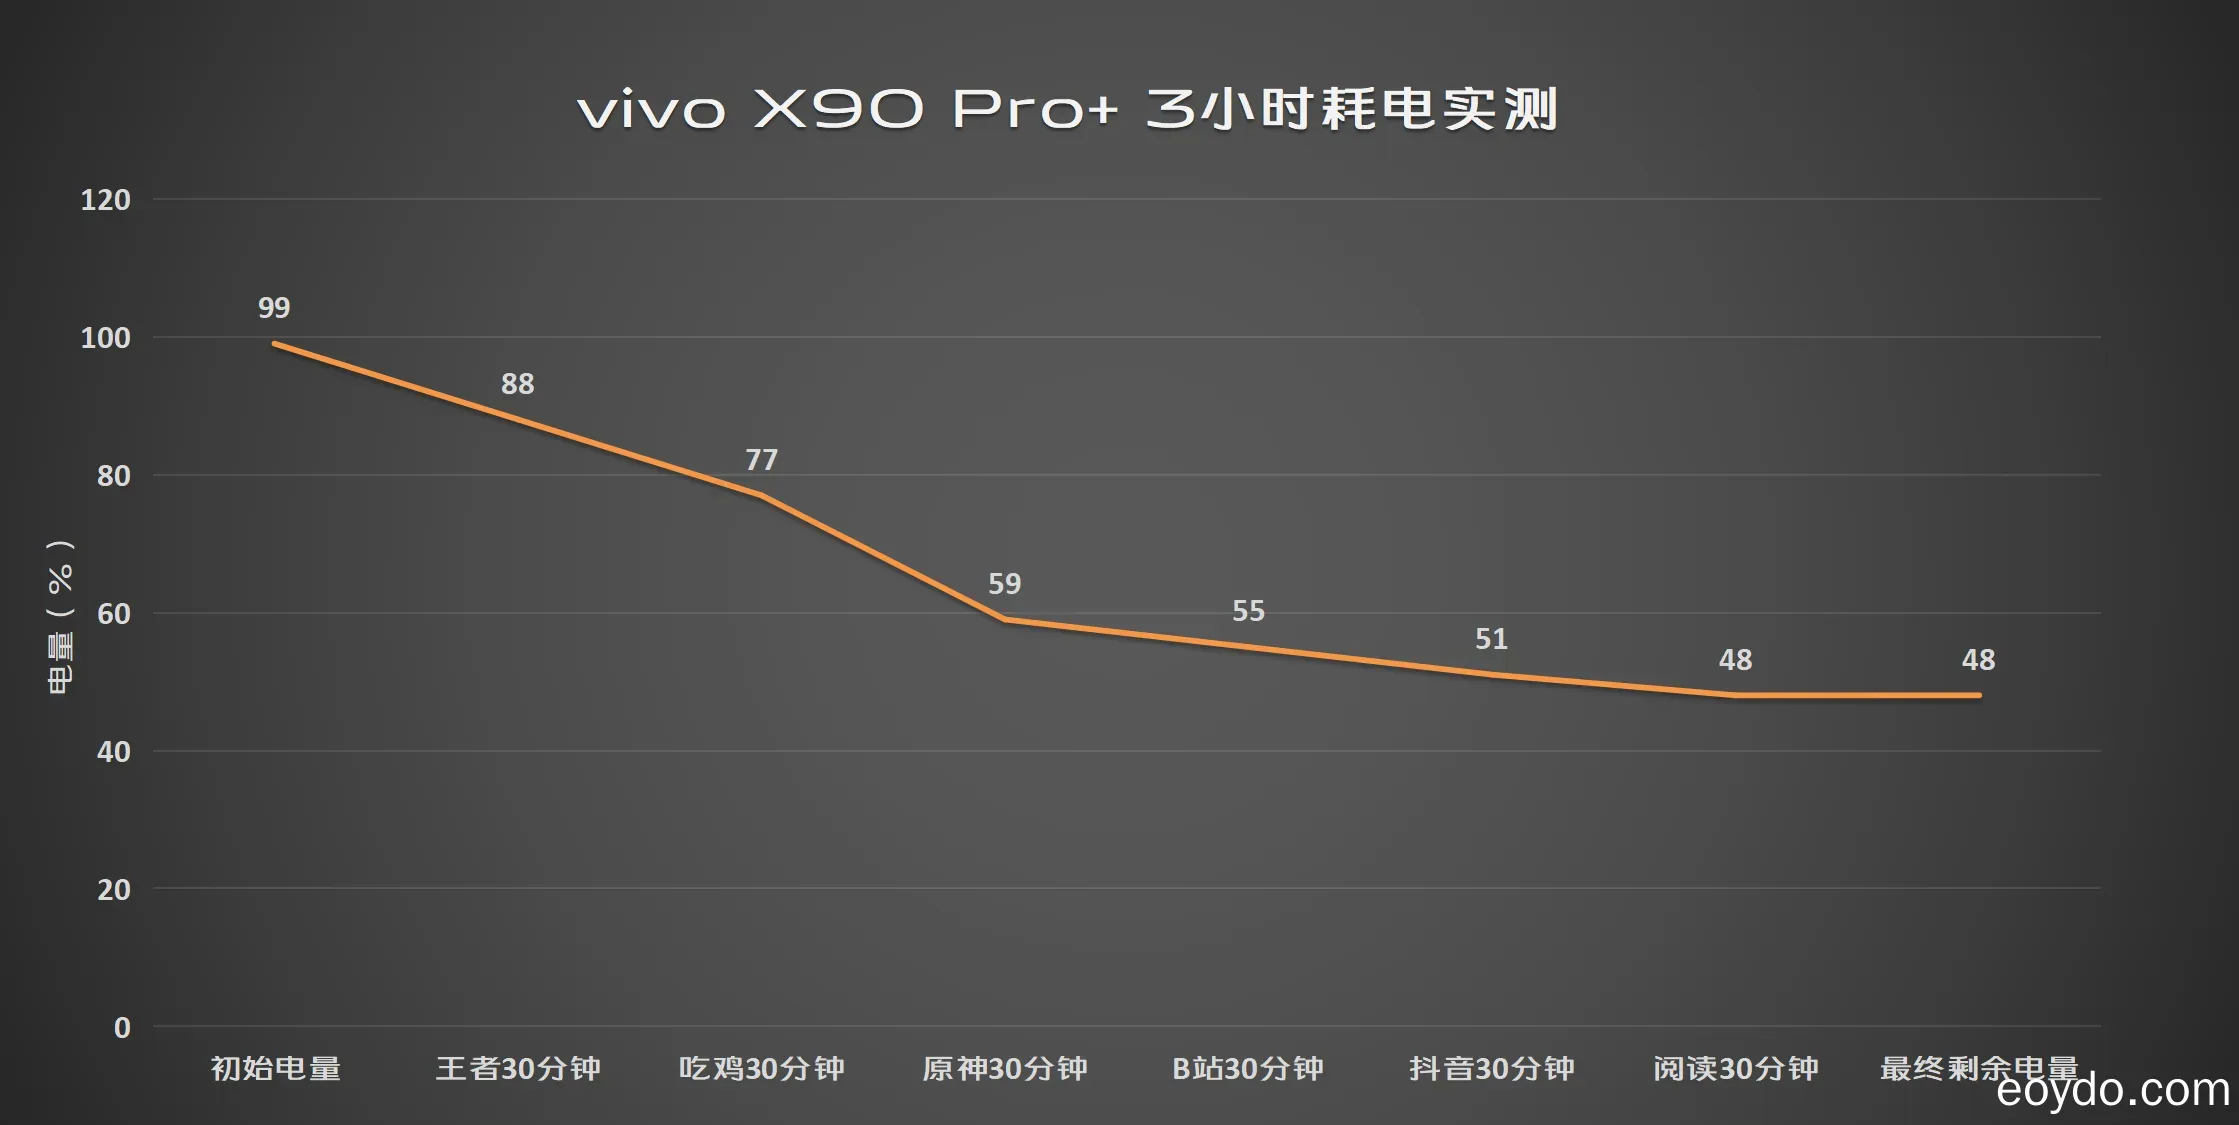 análise do vivo X90 Pro+